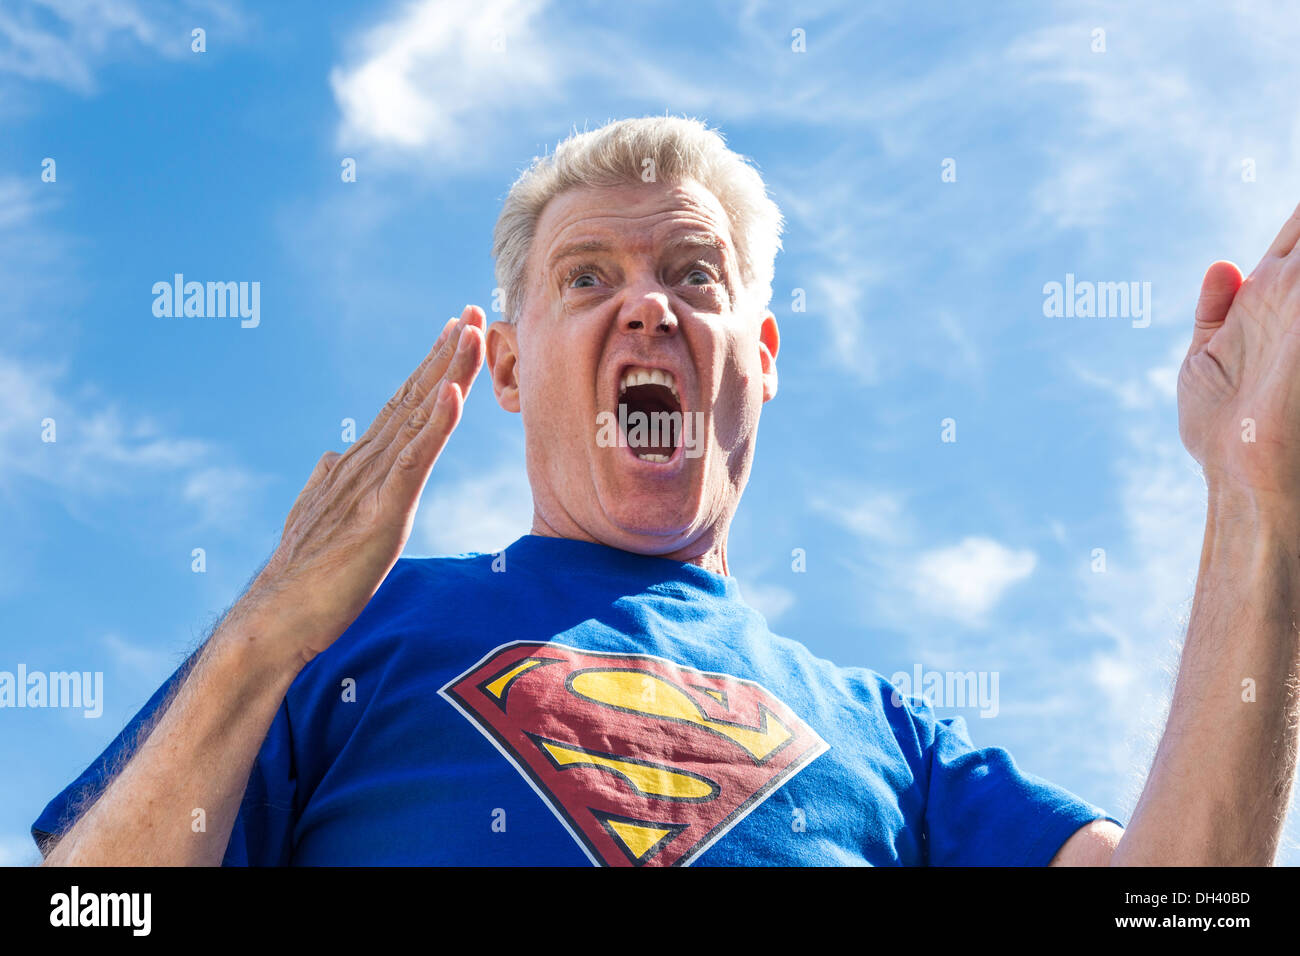 Humorous Senior Man Pretending to be Superman Stock Photo